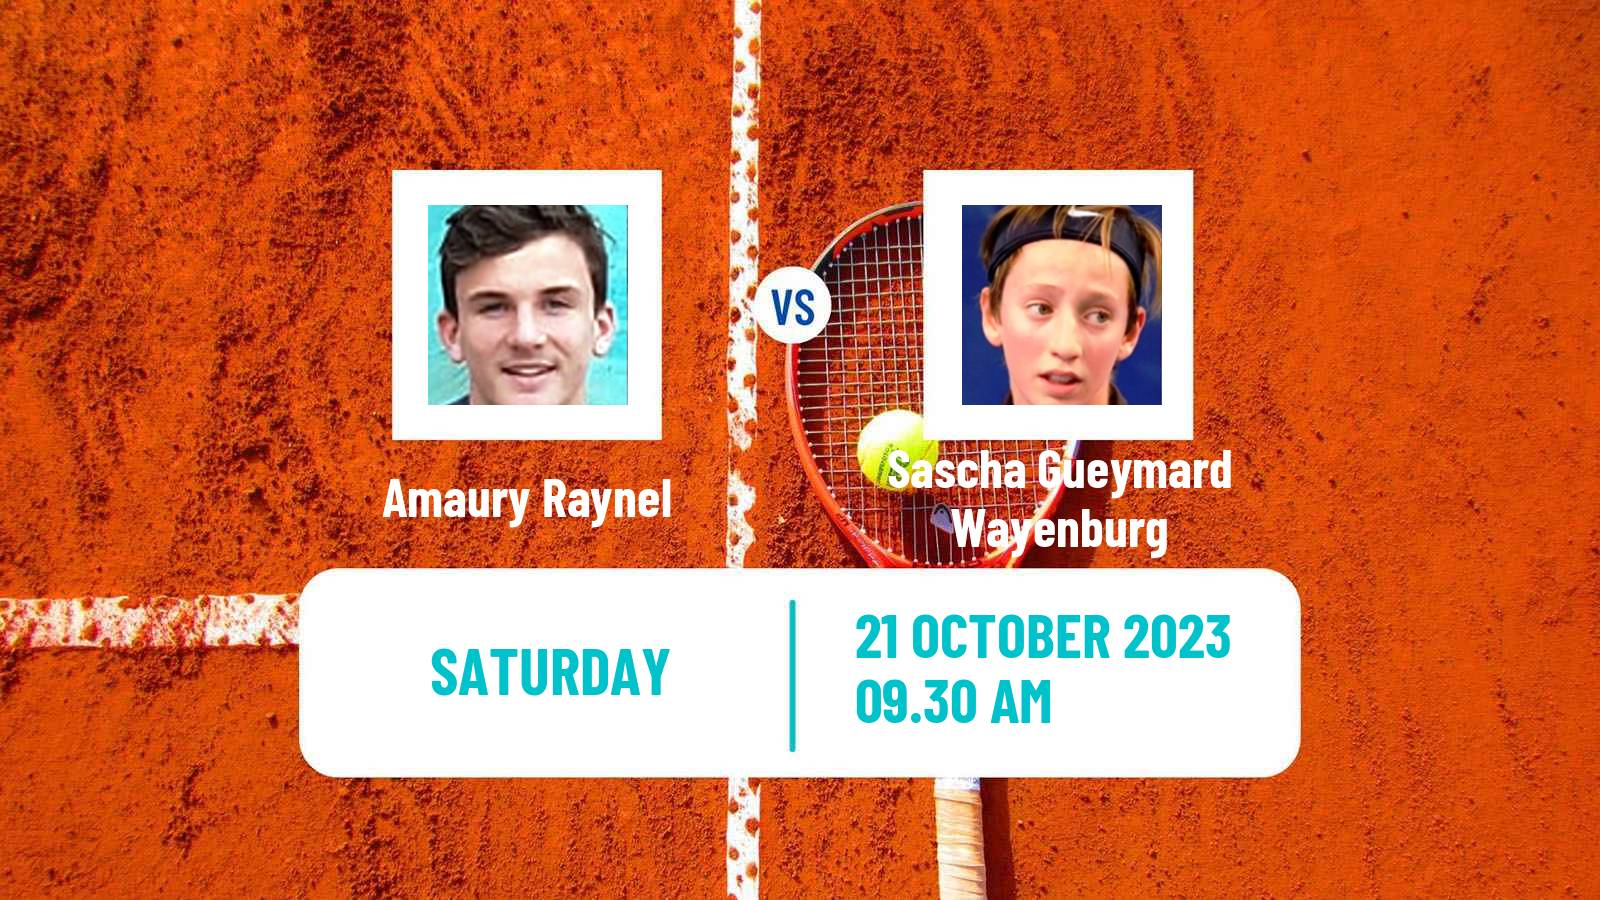 Tennis ITF M15 Villers Les Nancy Men Amaury Raynel - Sascha Gueymard Wayenburg